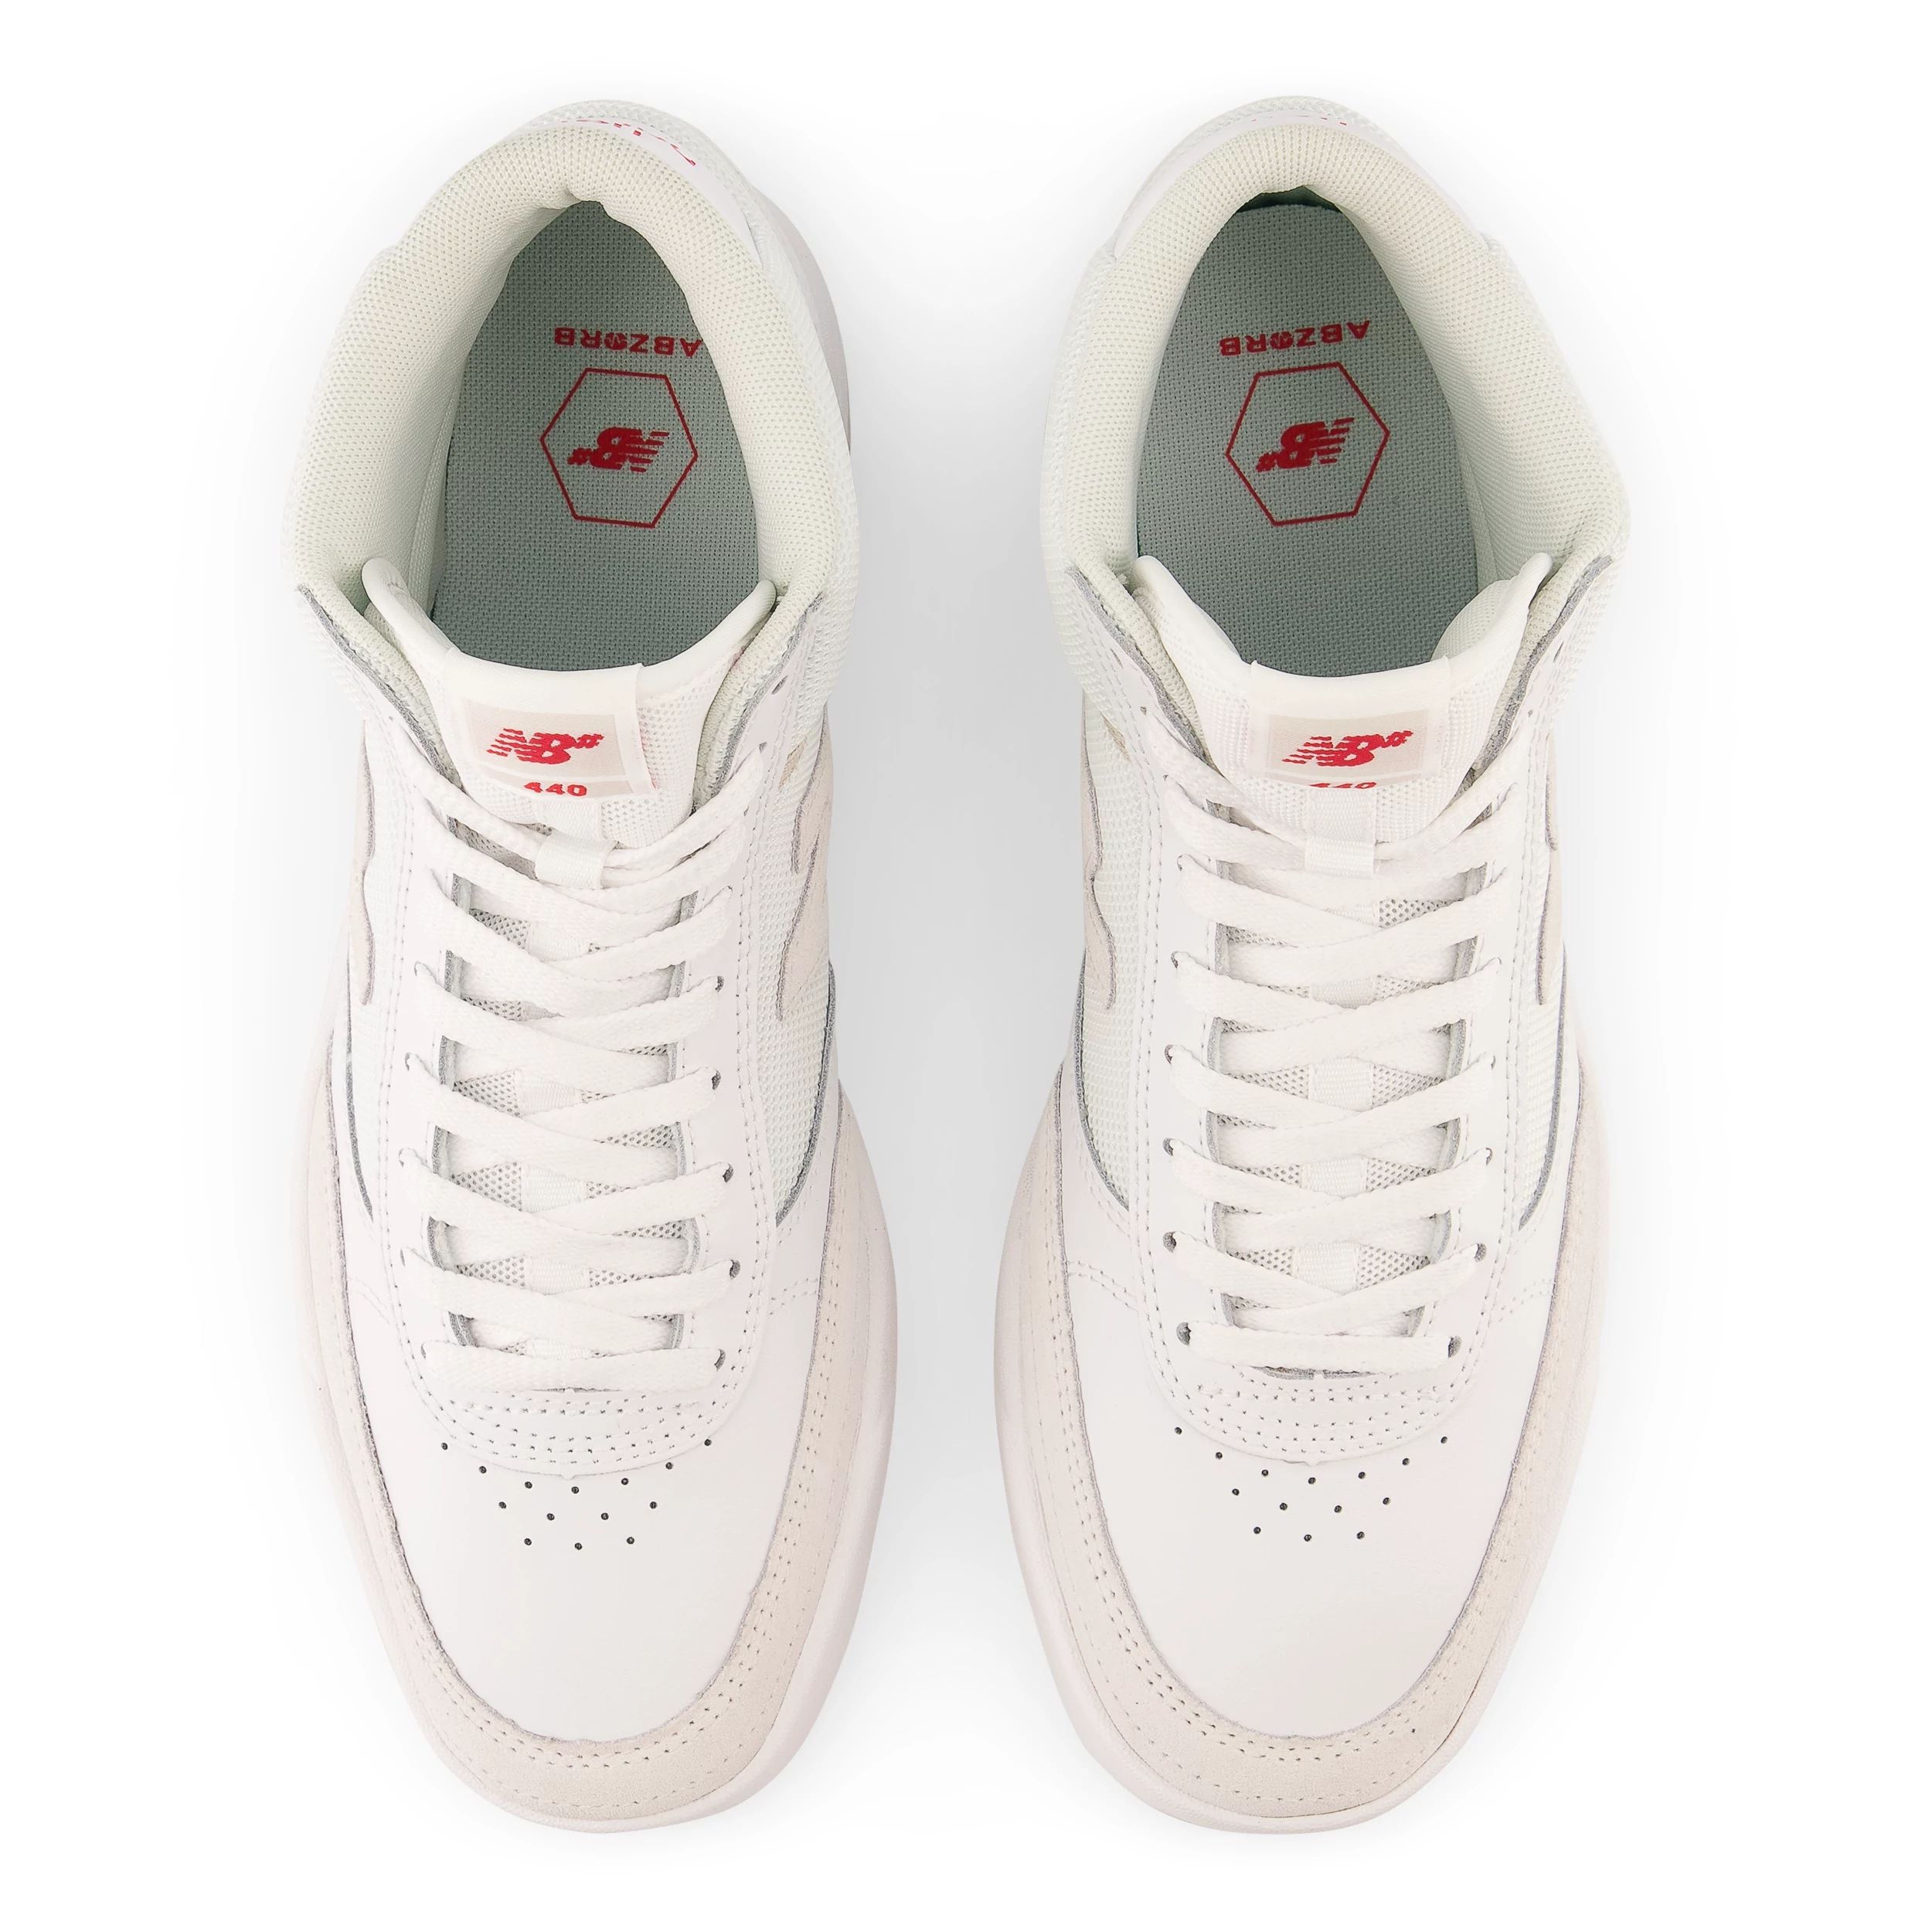 White/White NM440 High NB Numeric Skate Shoe Top